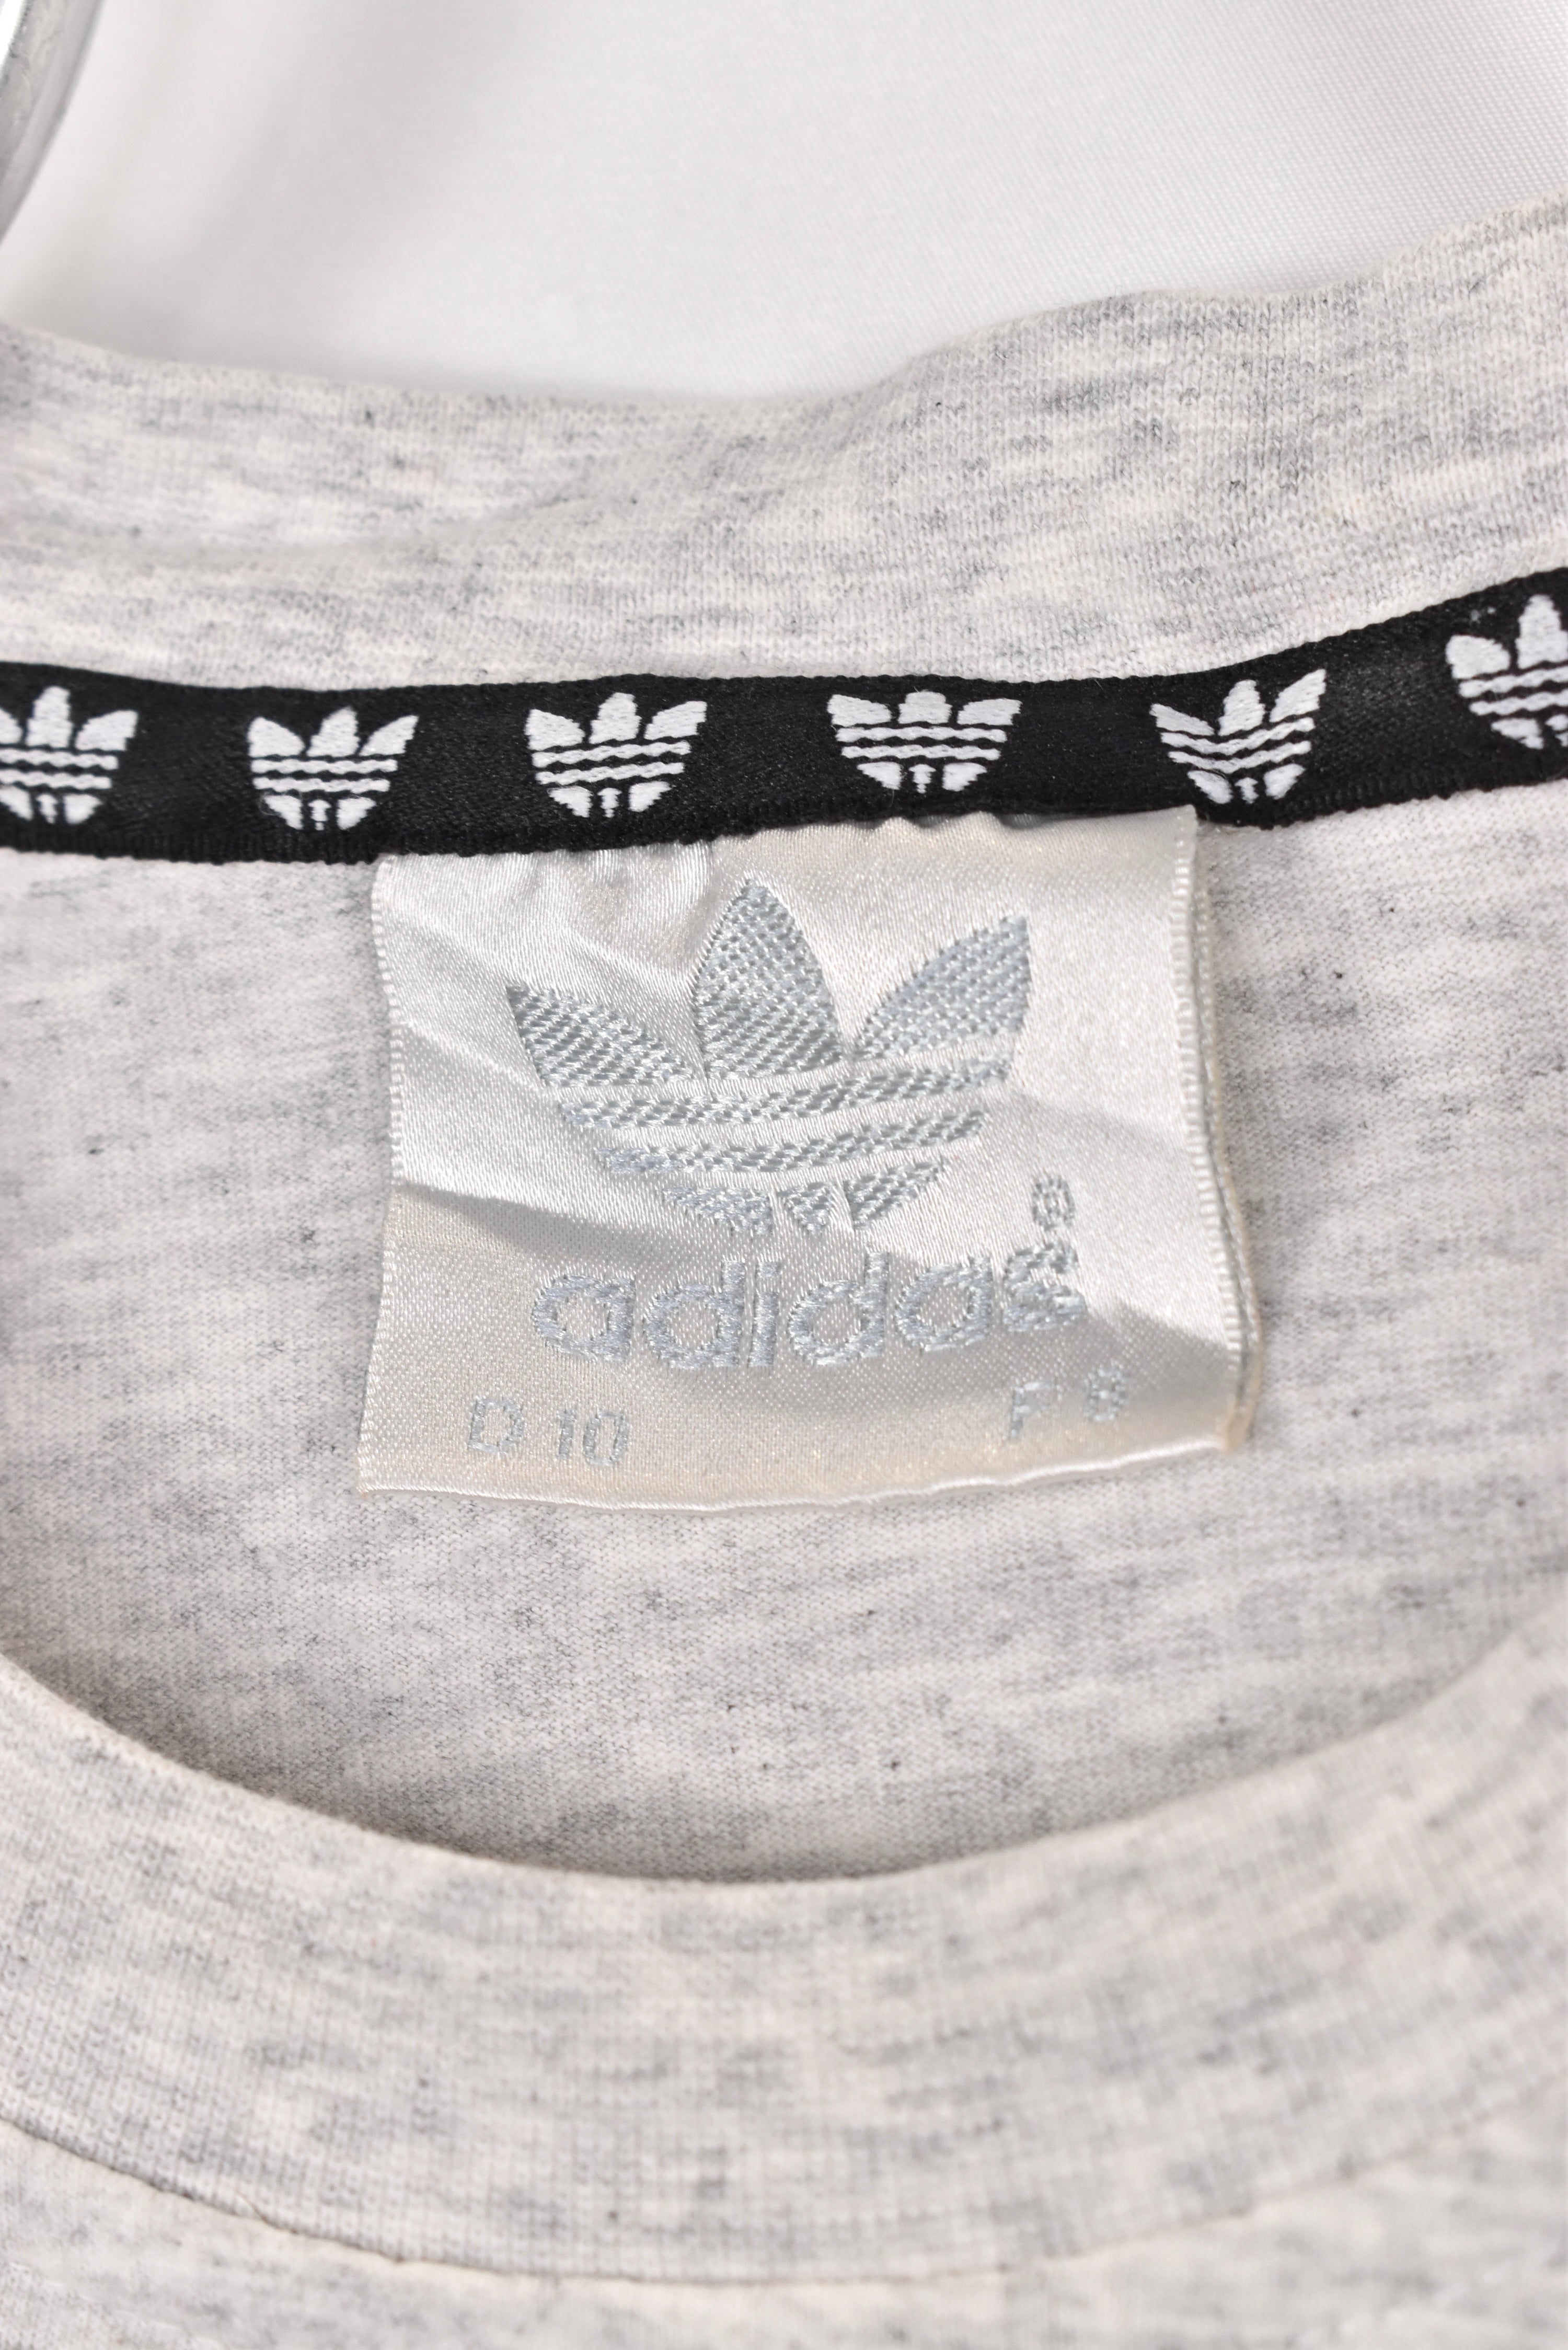 Vintage Adidas shirt, grey embroidered tee - AU XL ADIDAS